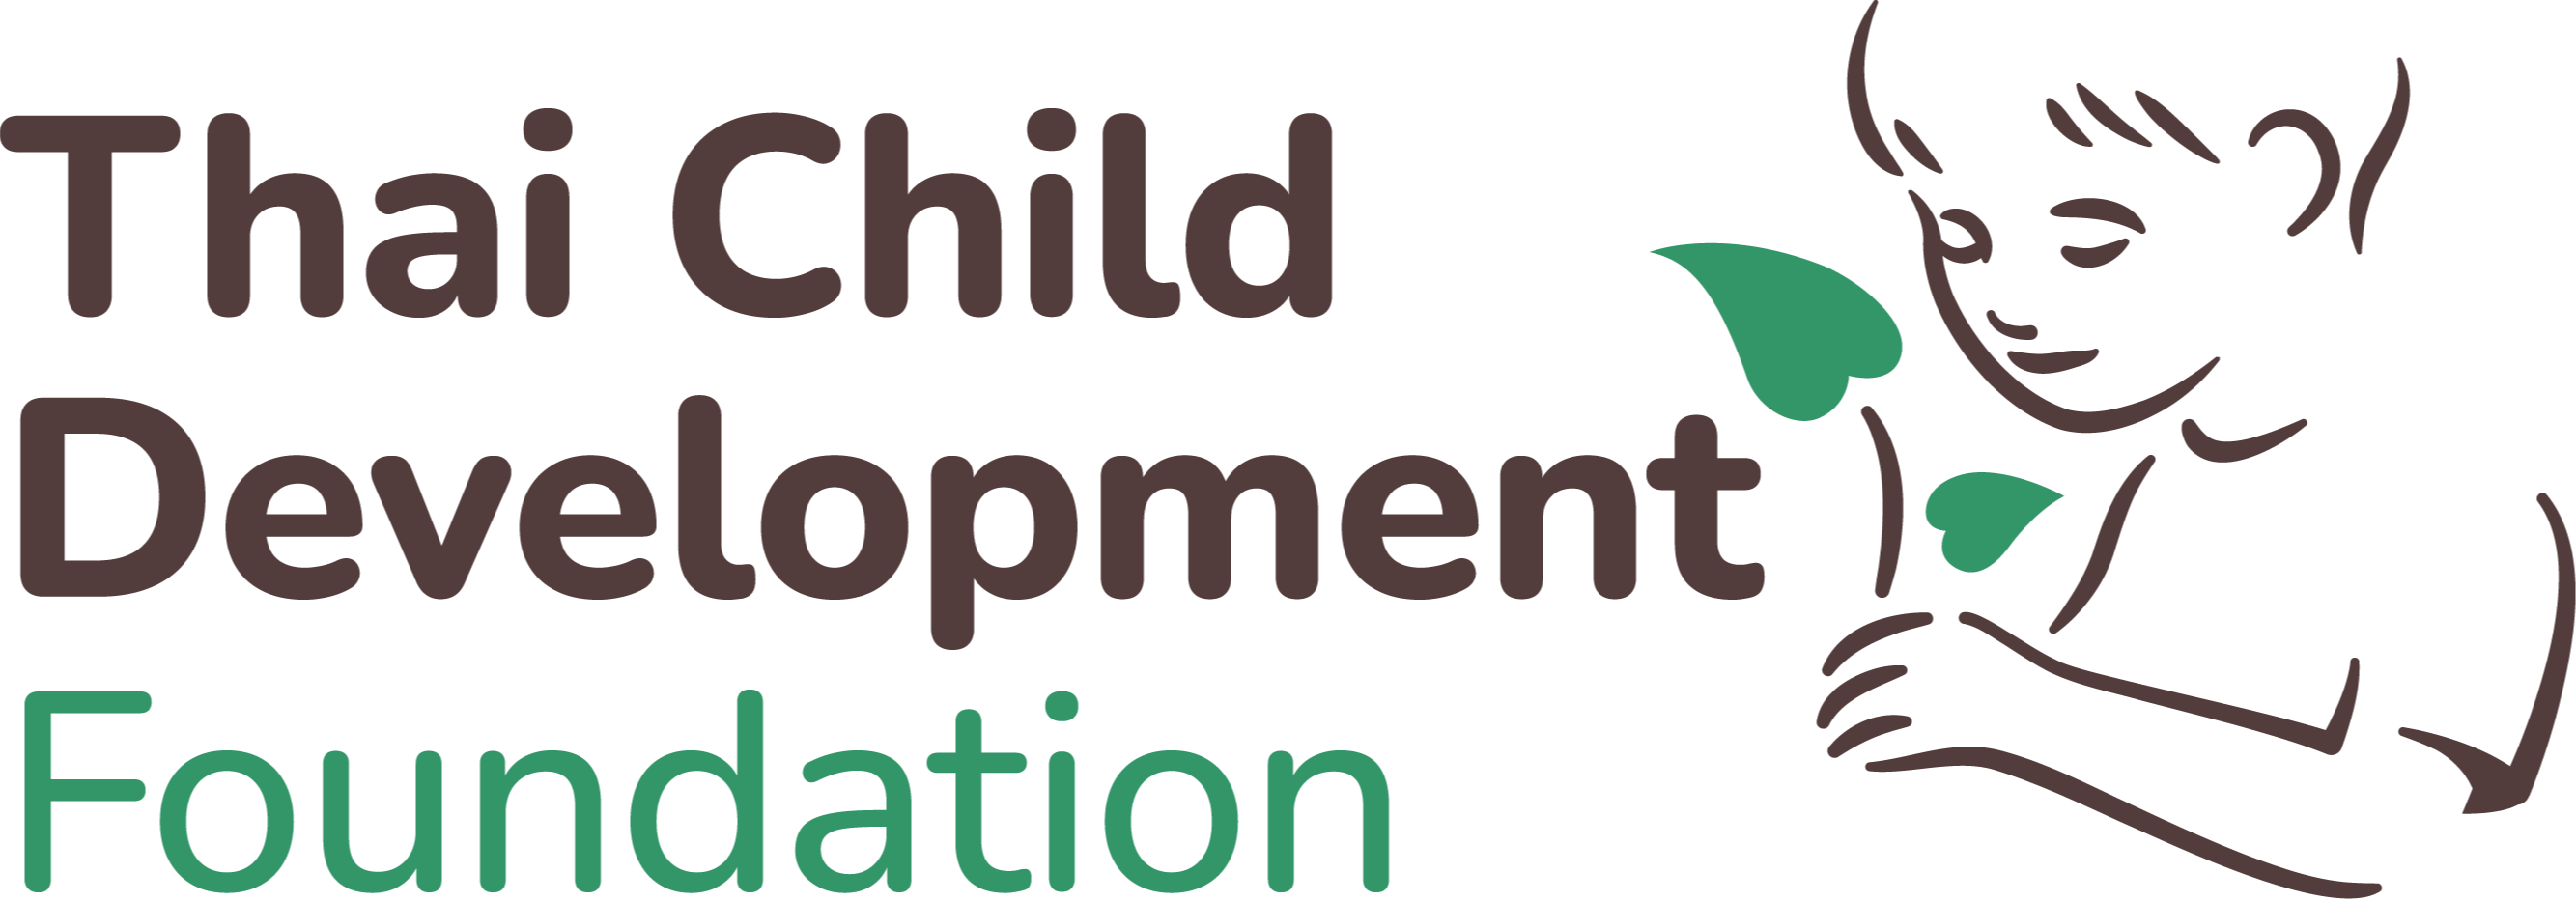 Thai Child Development Foundation logo